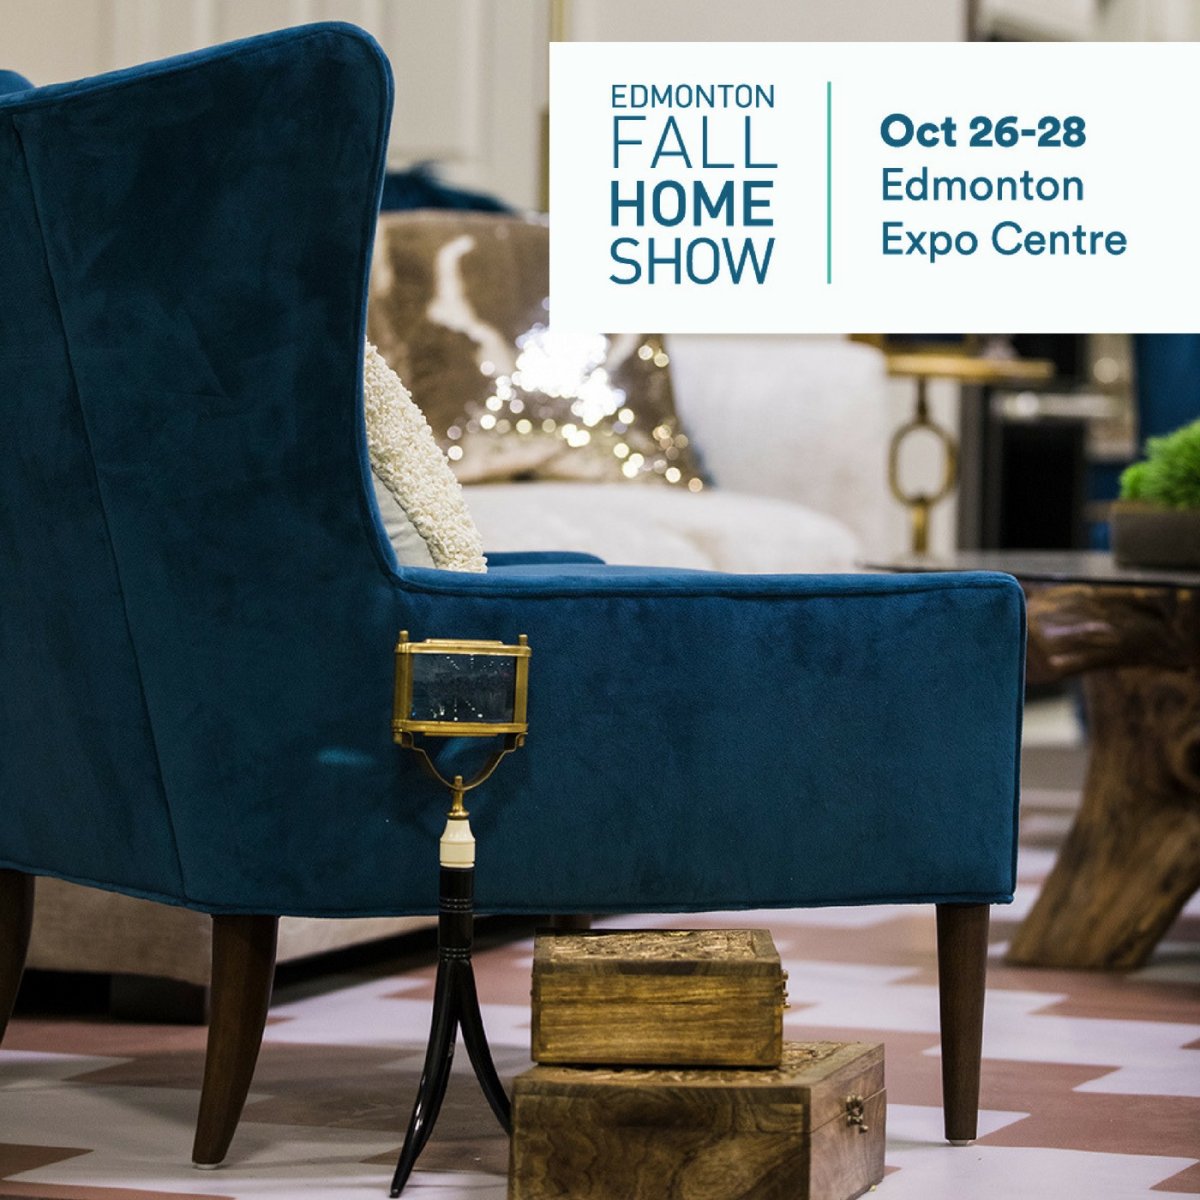 Edmonton Fall Home Show - image